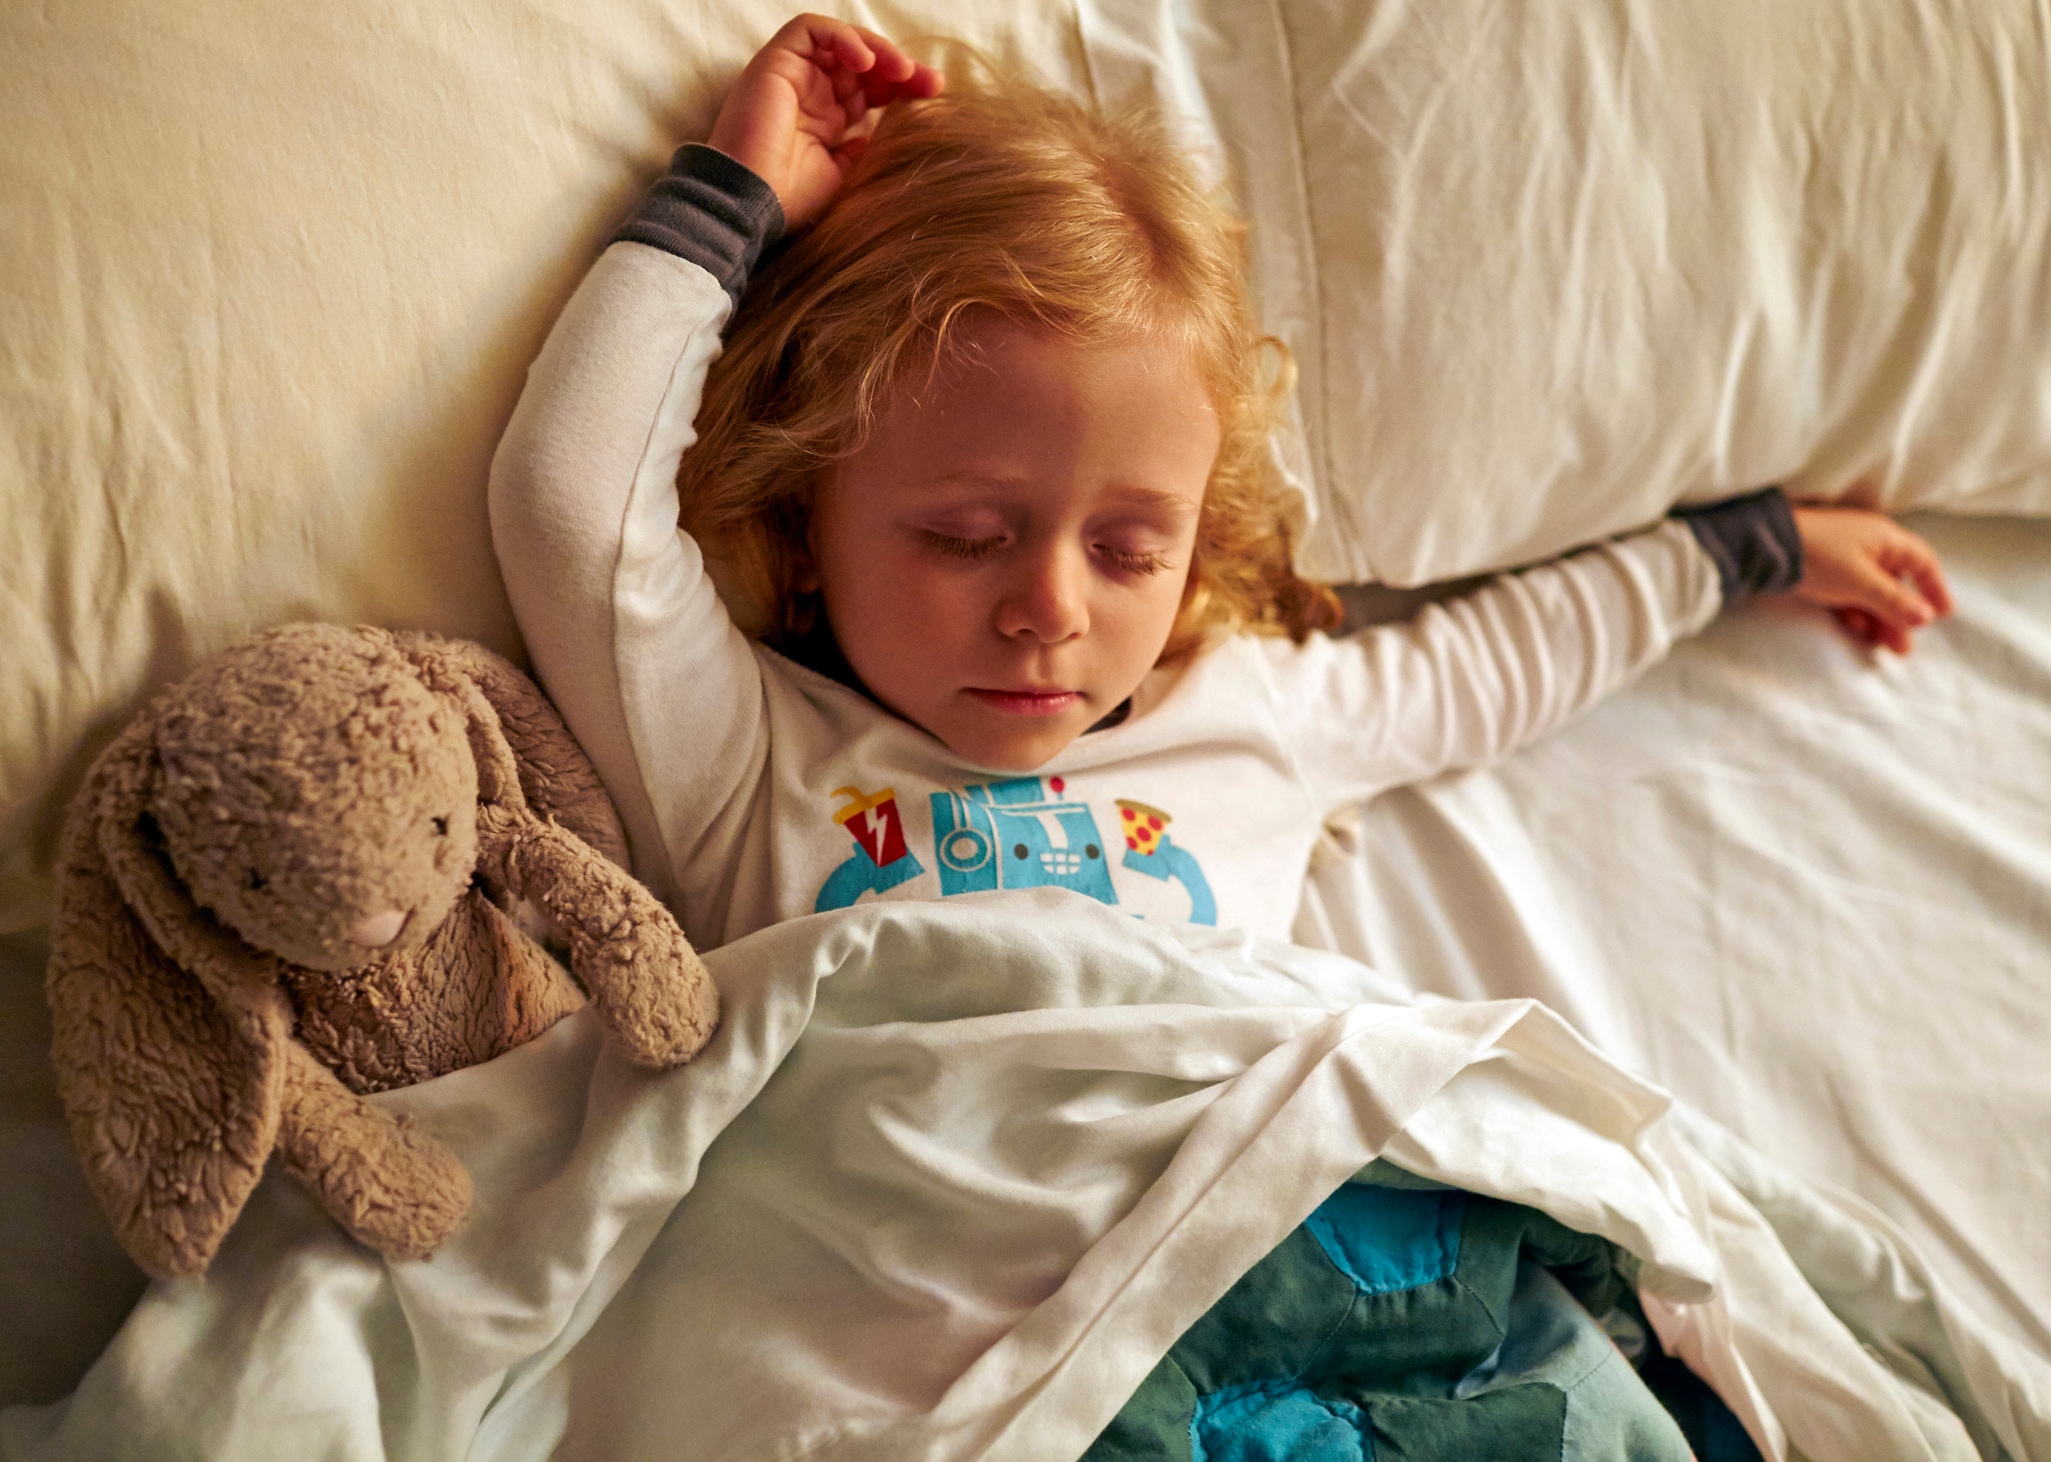 6 potential toddler pillow hazards, plus 6 safer toddler pillow picks